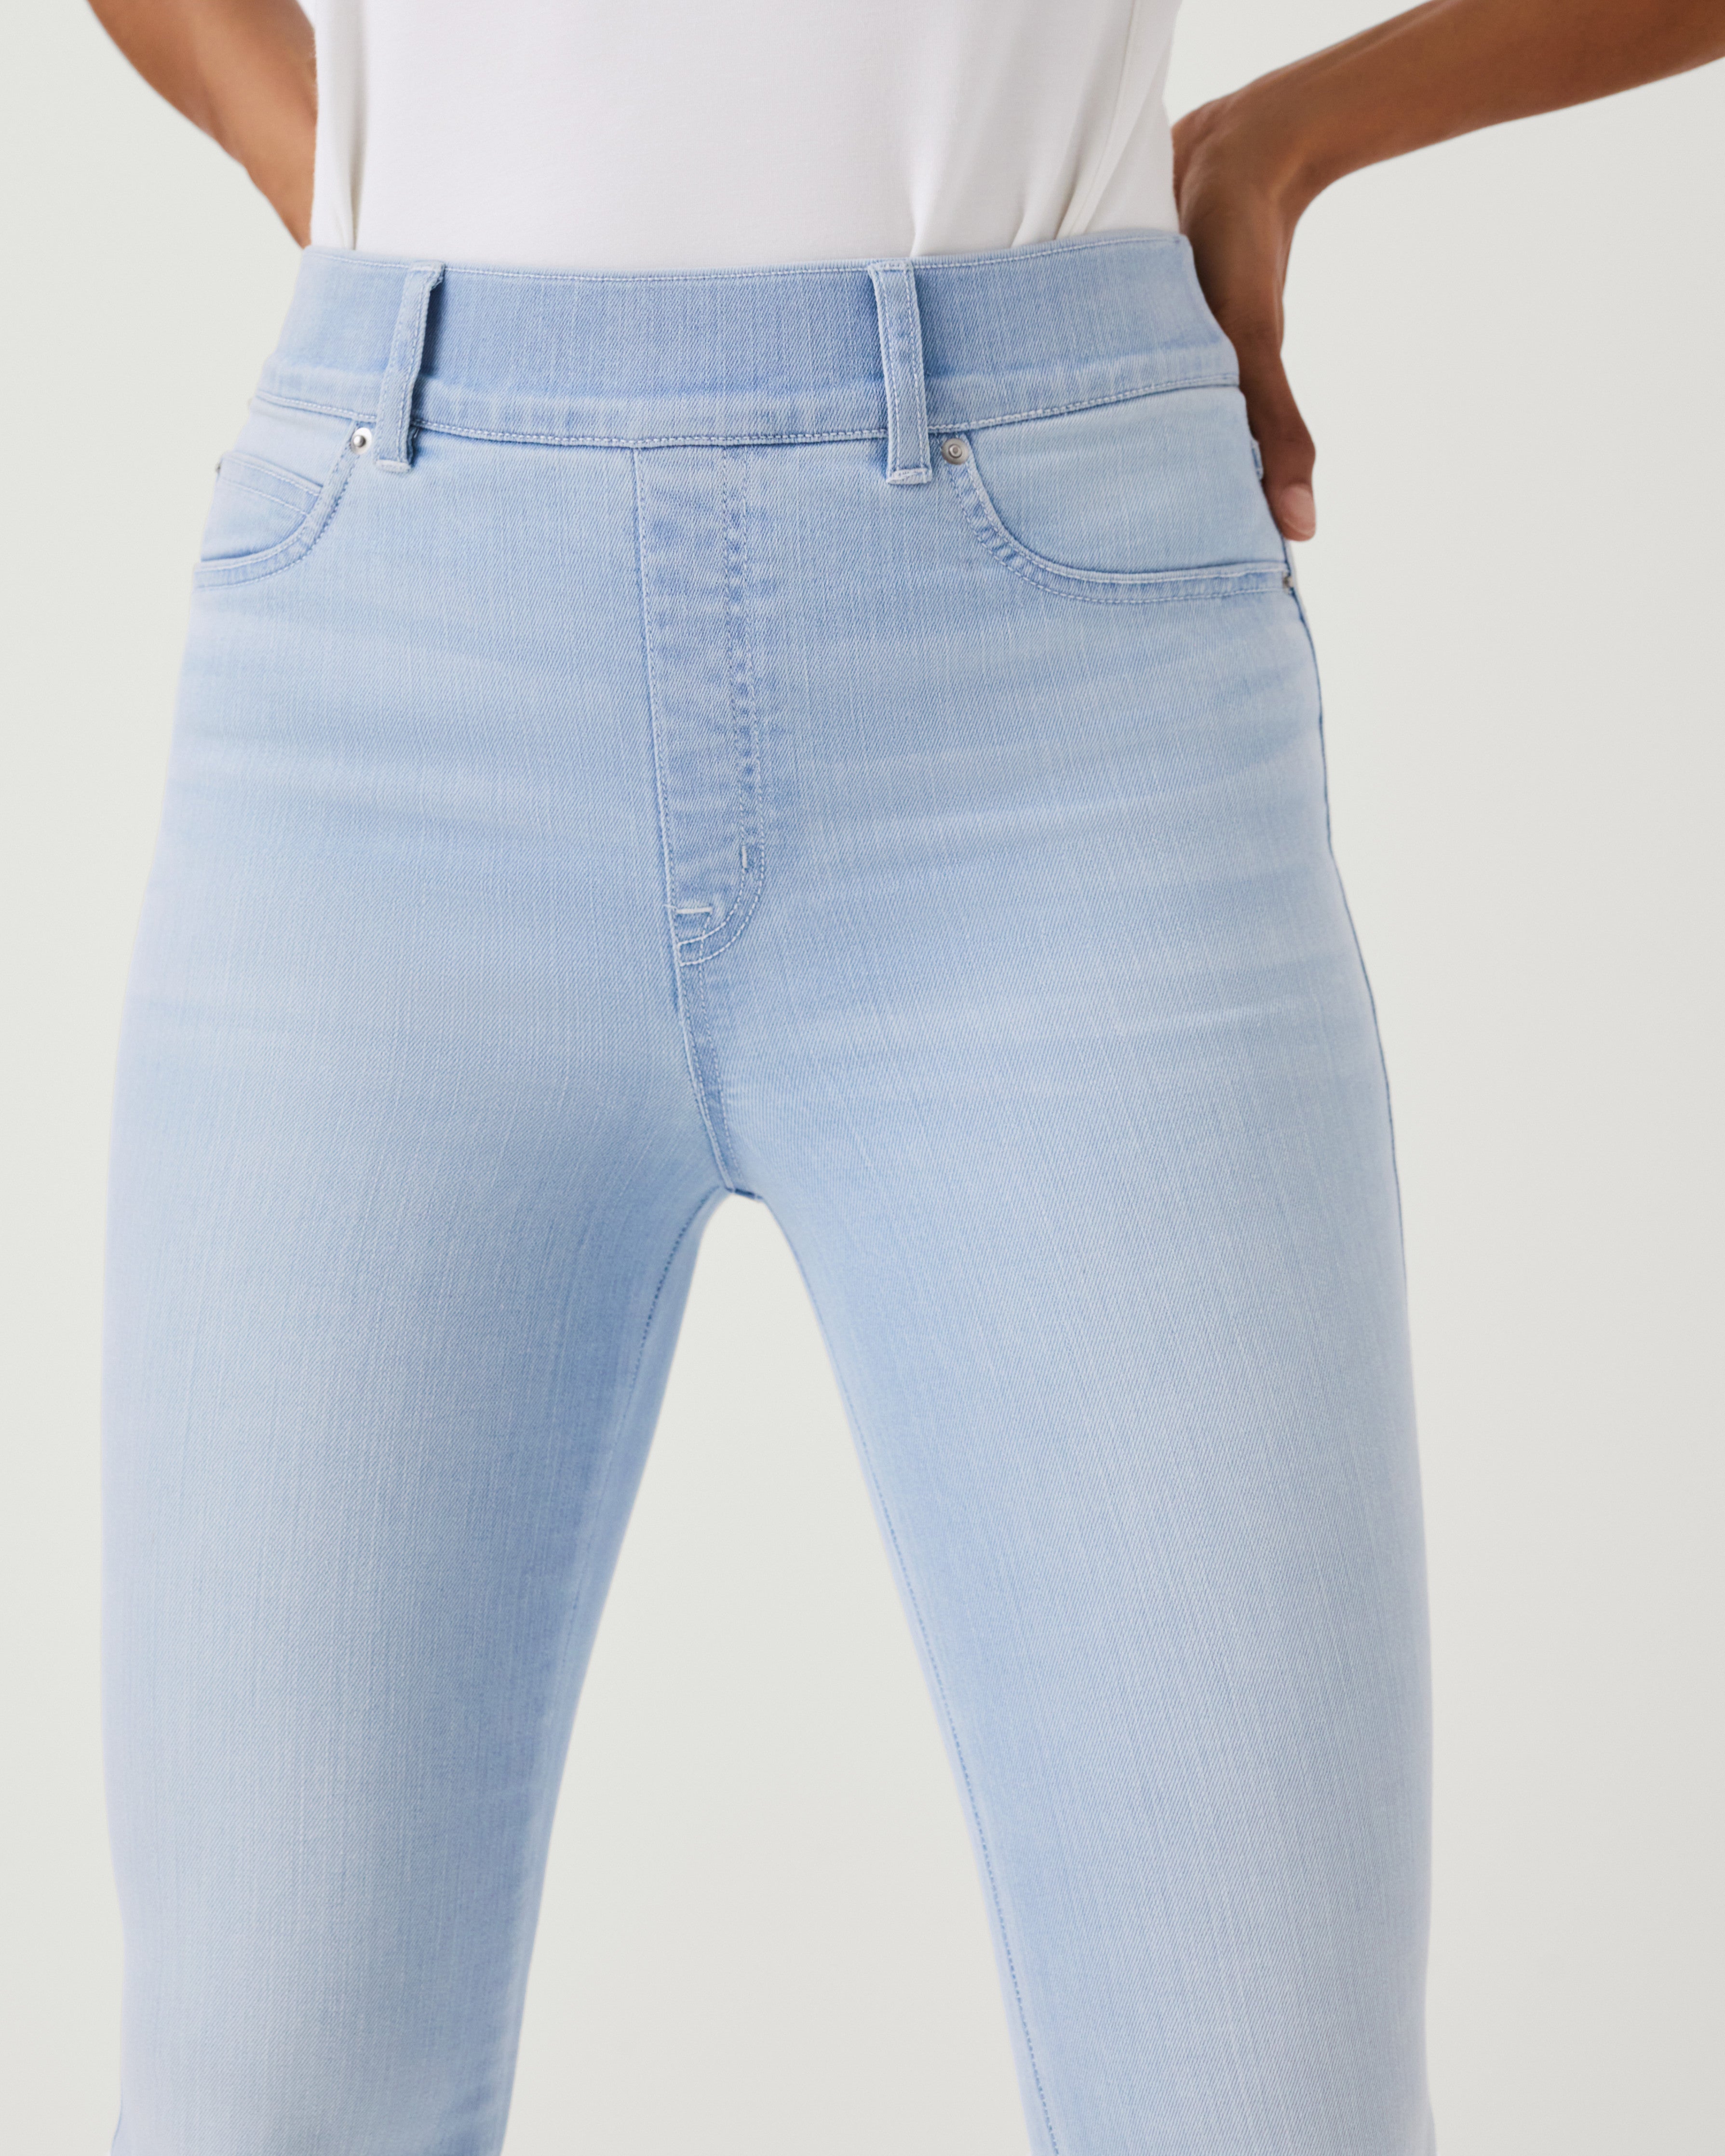 Spanx Jeans Womens Sz Large 29x27 Skinny Stretch Pull On Blue Raw